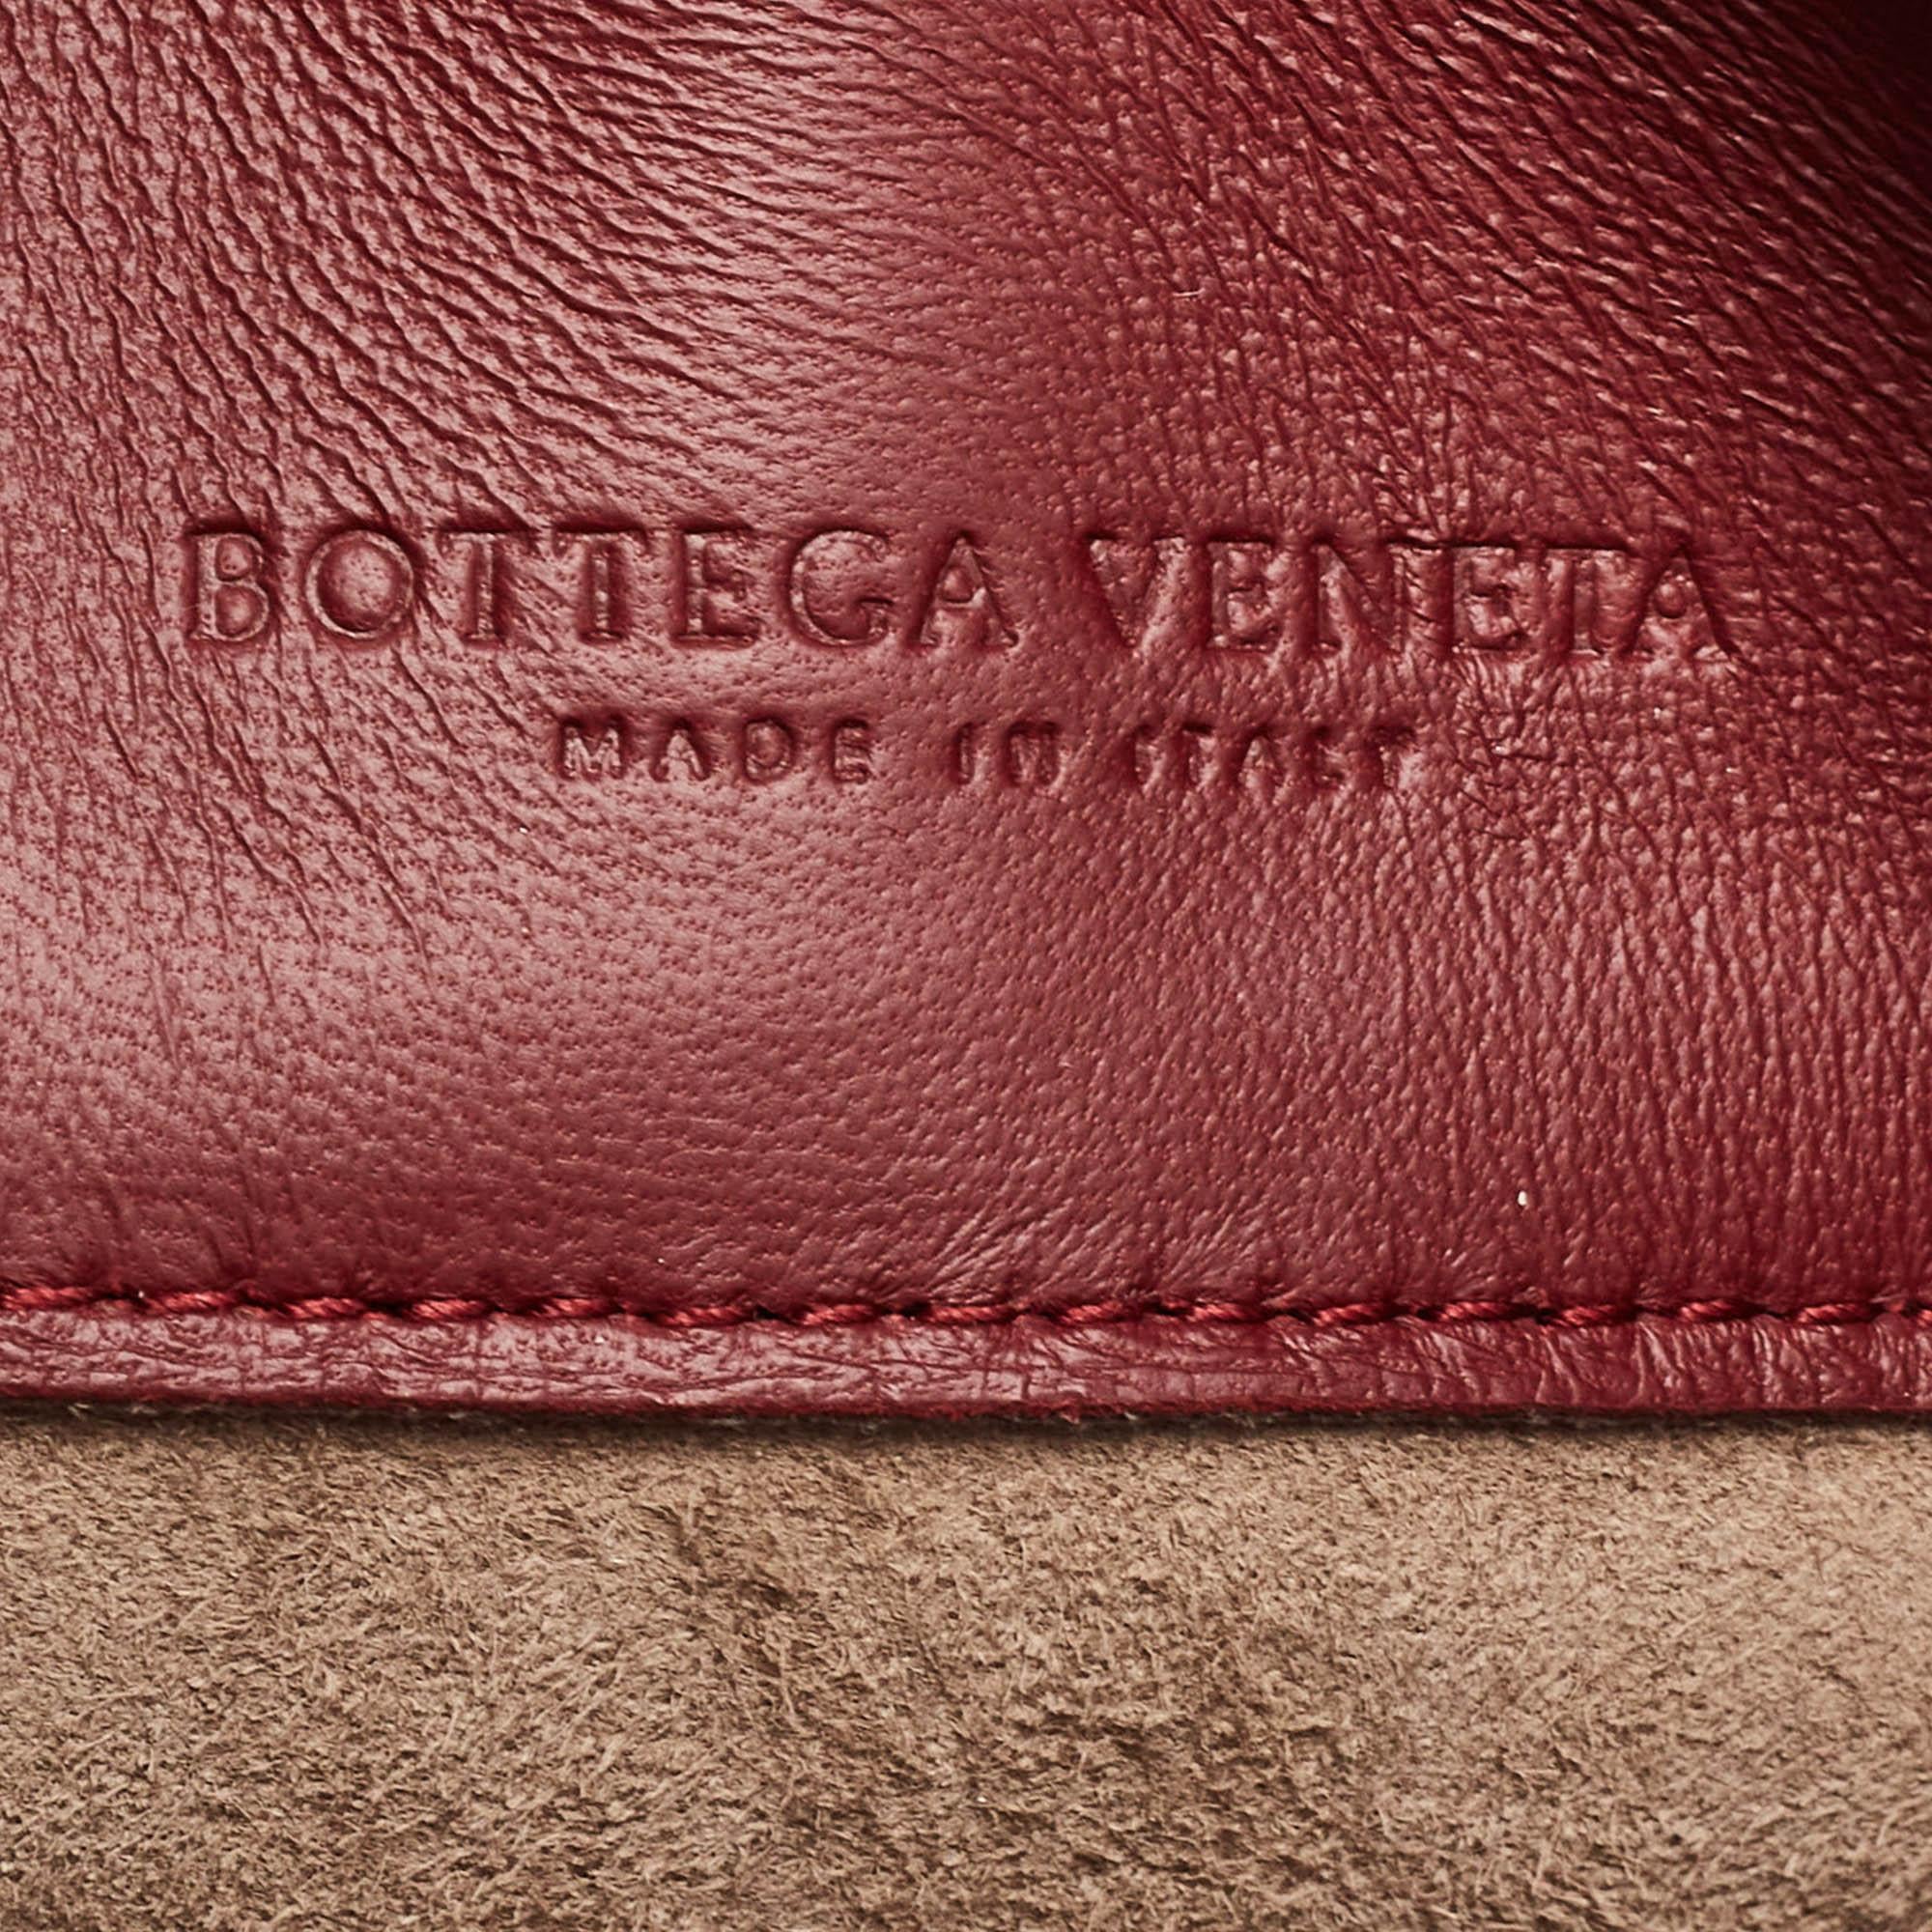 Bottega Veneta Dark Red Intrecciato Leather Small Olimpia Shoulder Bag For Sale 5